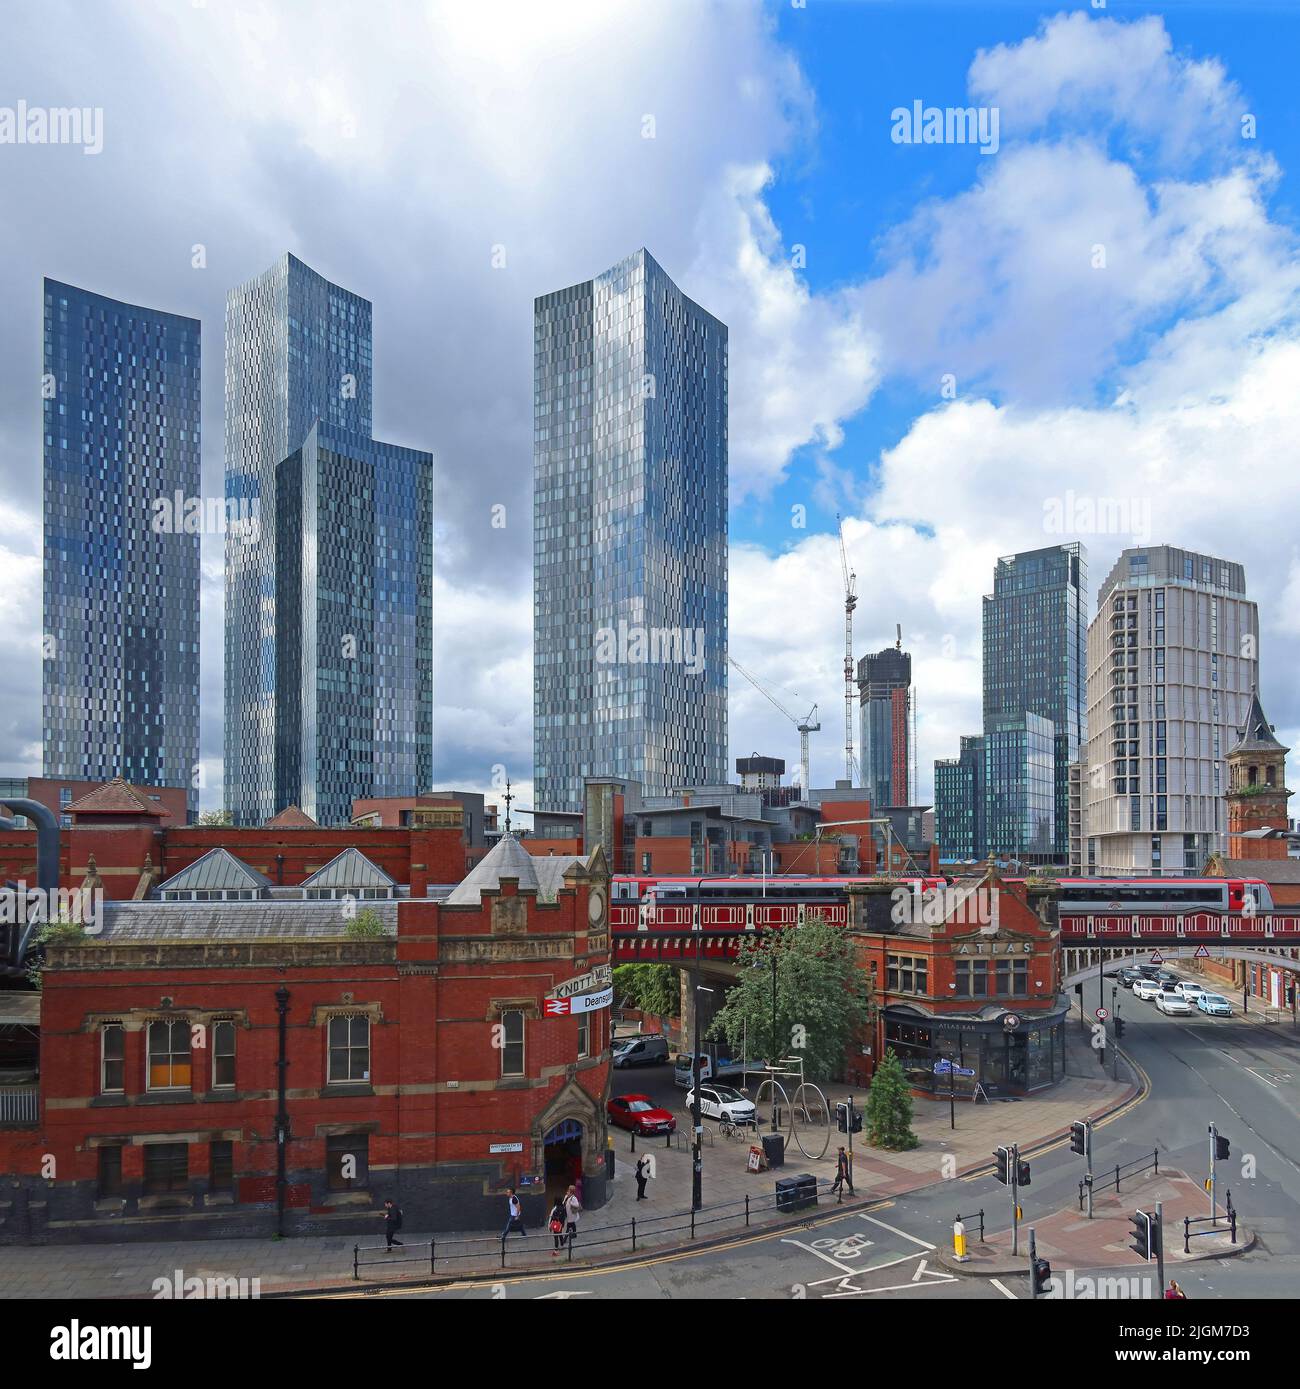 Panorama de Deansgate Castlefield, Manchester, 2 Whitworth St W, Deansgate, Locks, Manchester, Angleterre, ROYAUME-UNI, M1 5LH Banque D'Images